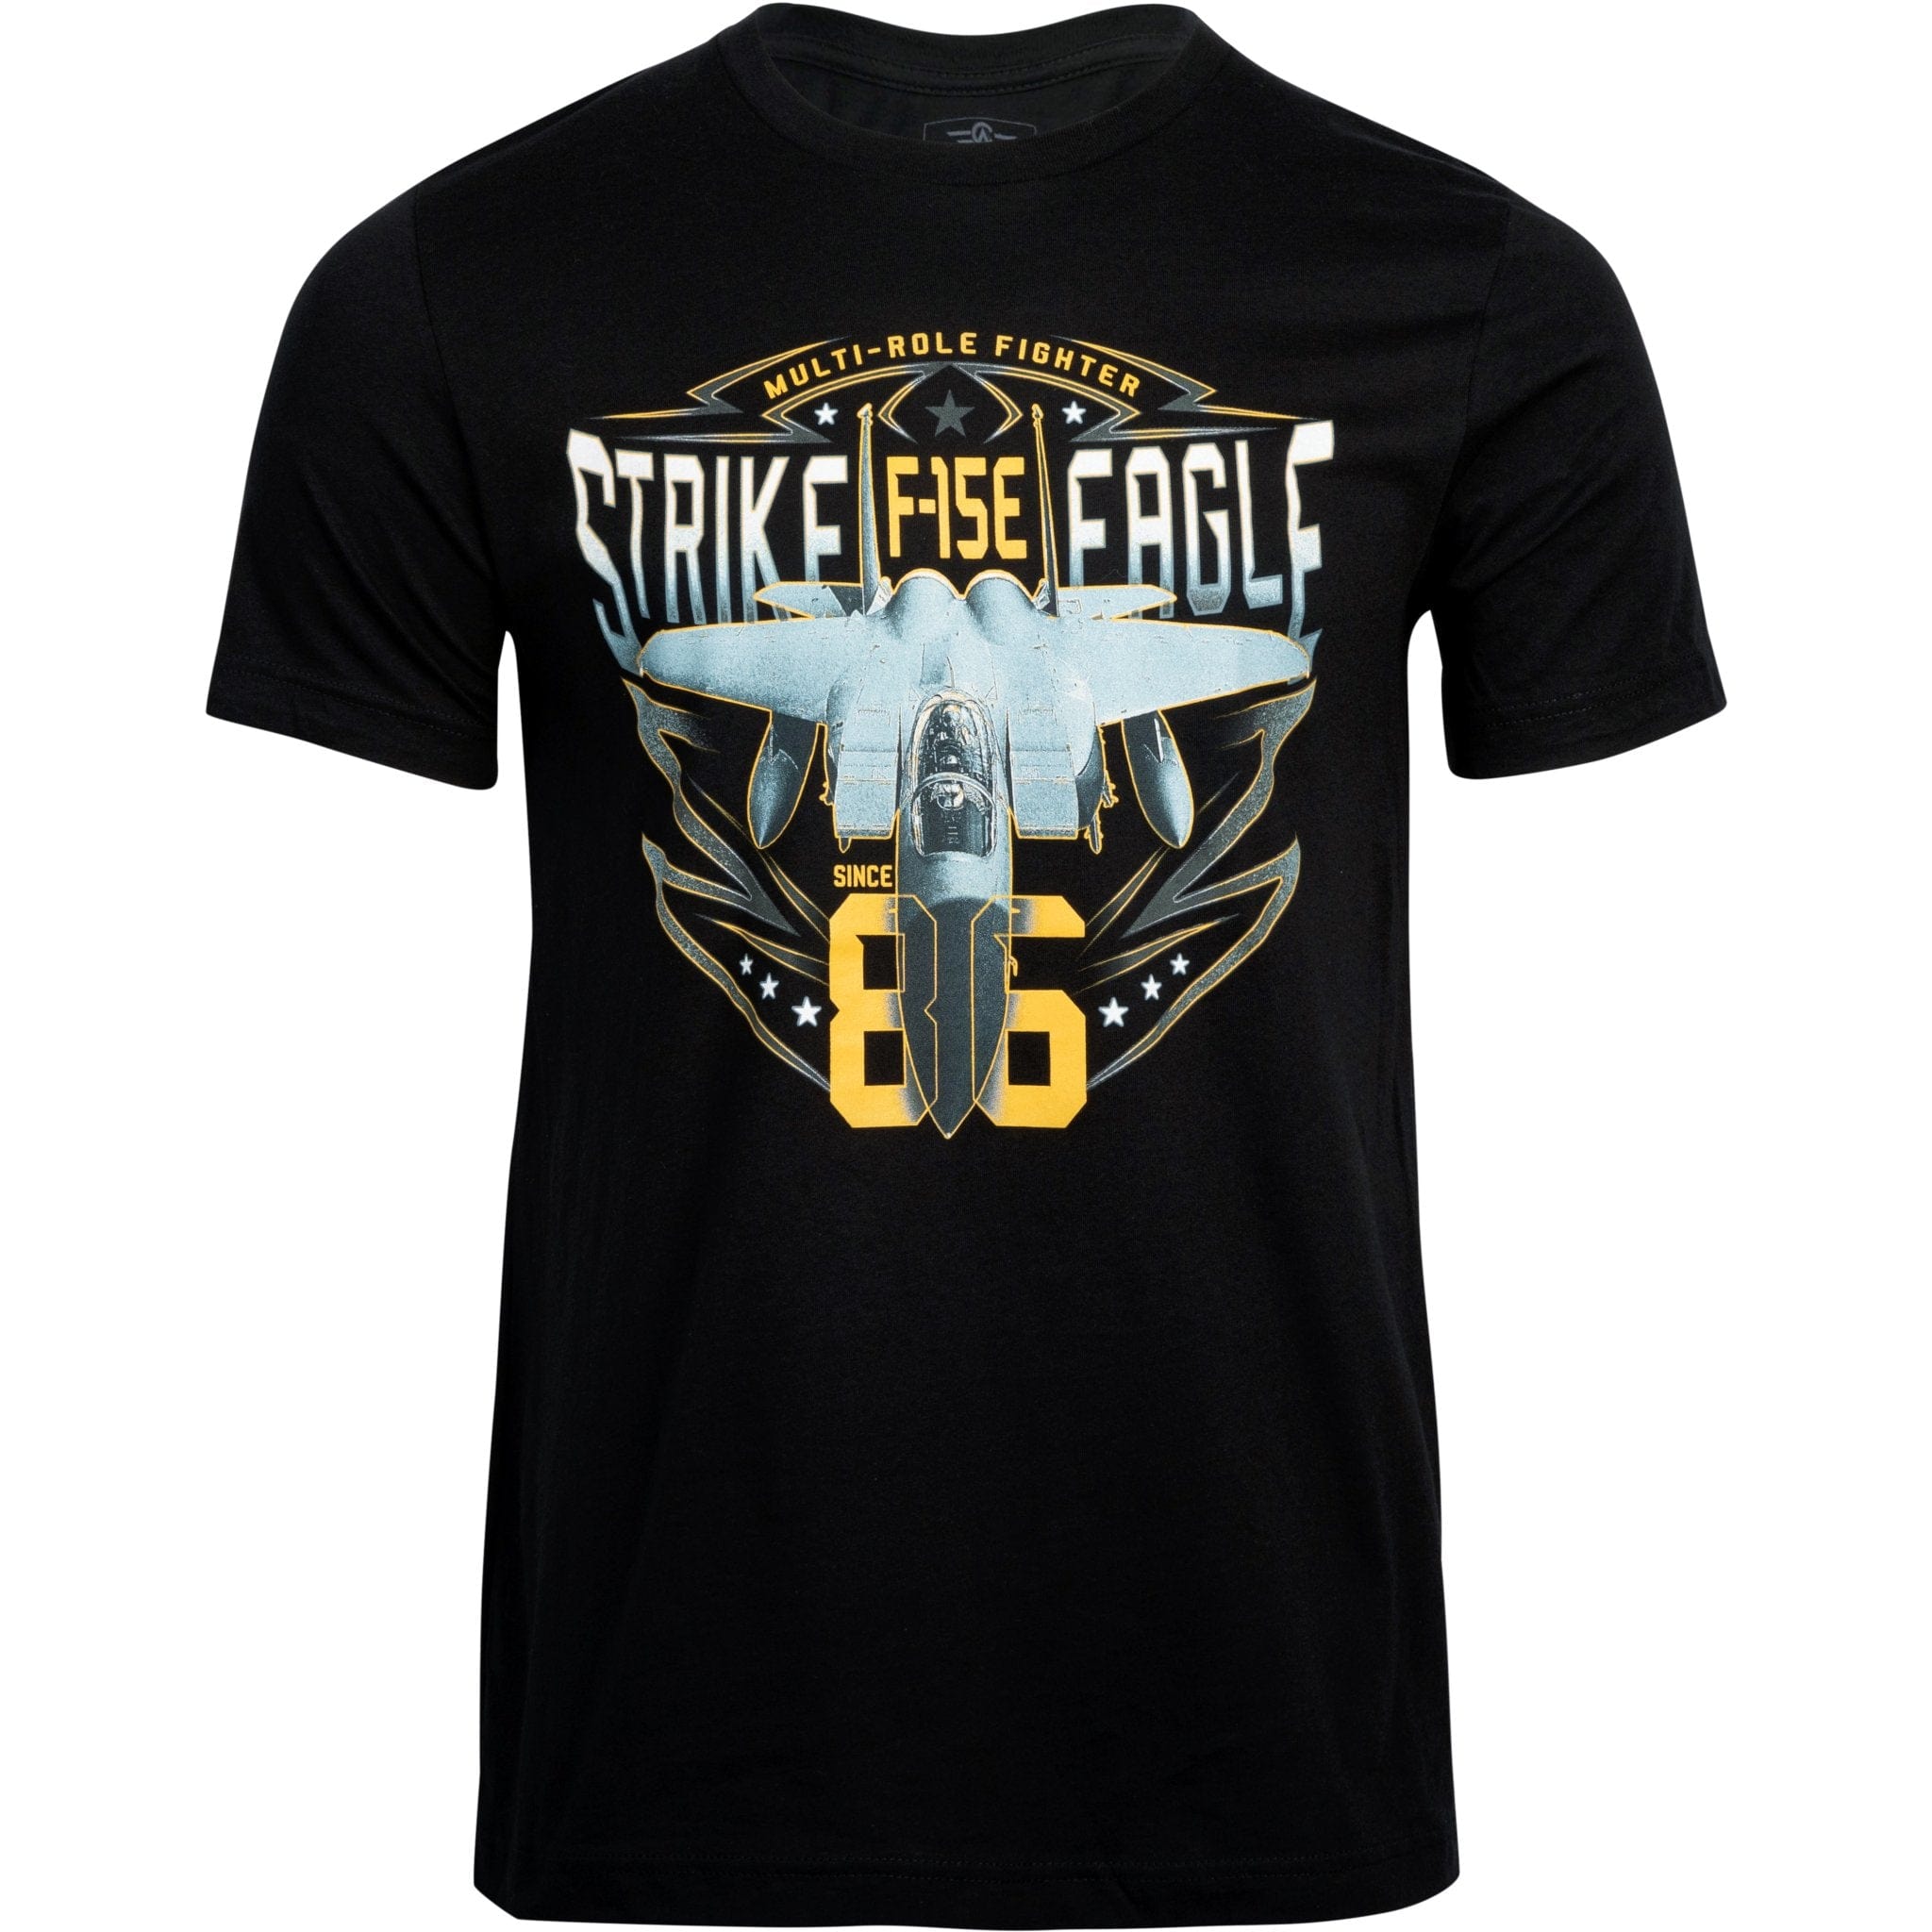 Boeing F-15E Strike Eagle Officially Licensed Aeroplane Apparel Co. Men's T-Shirt